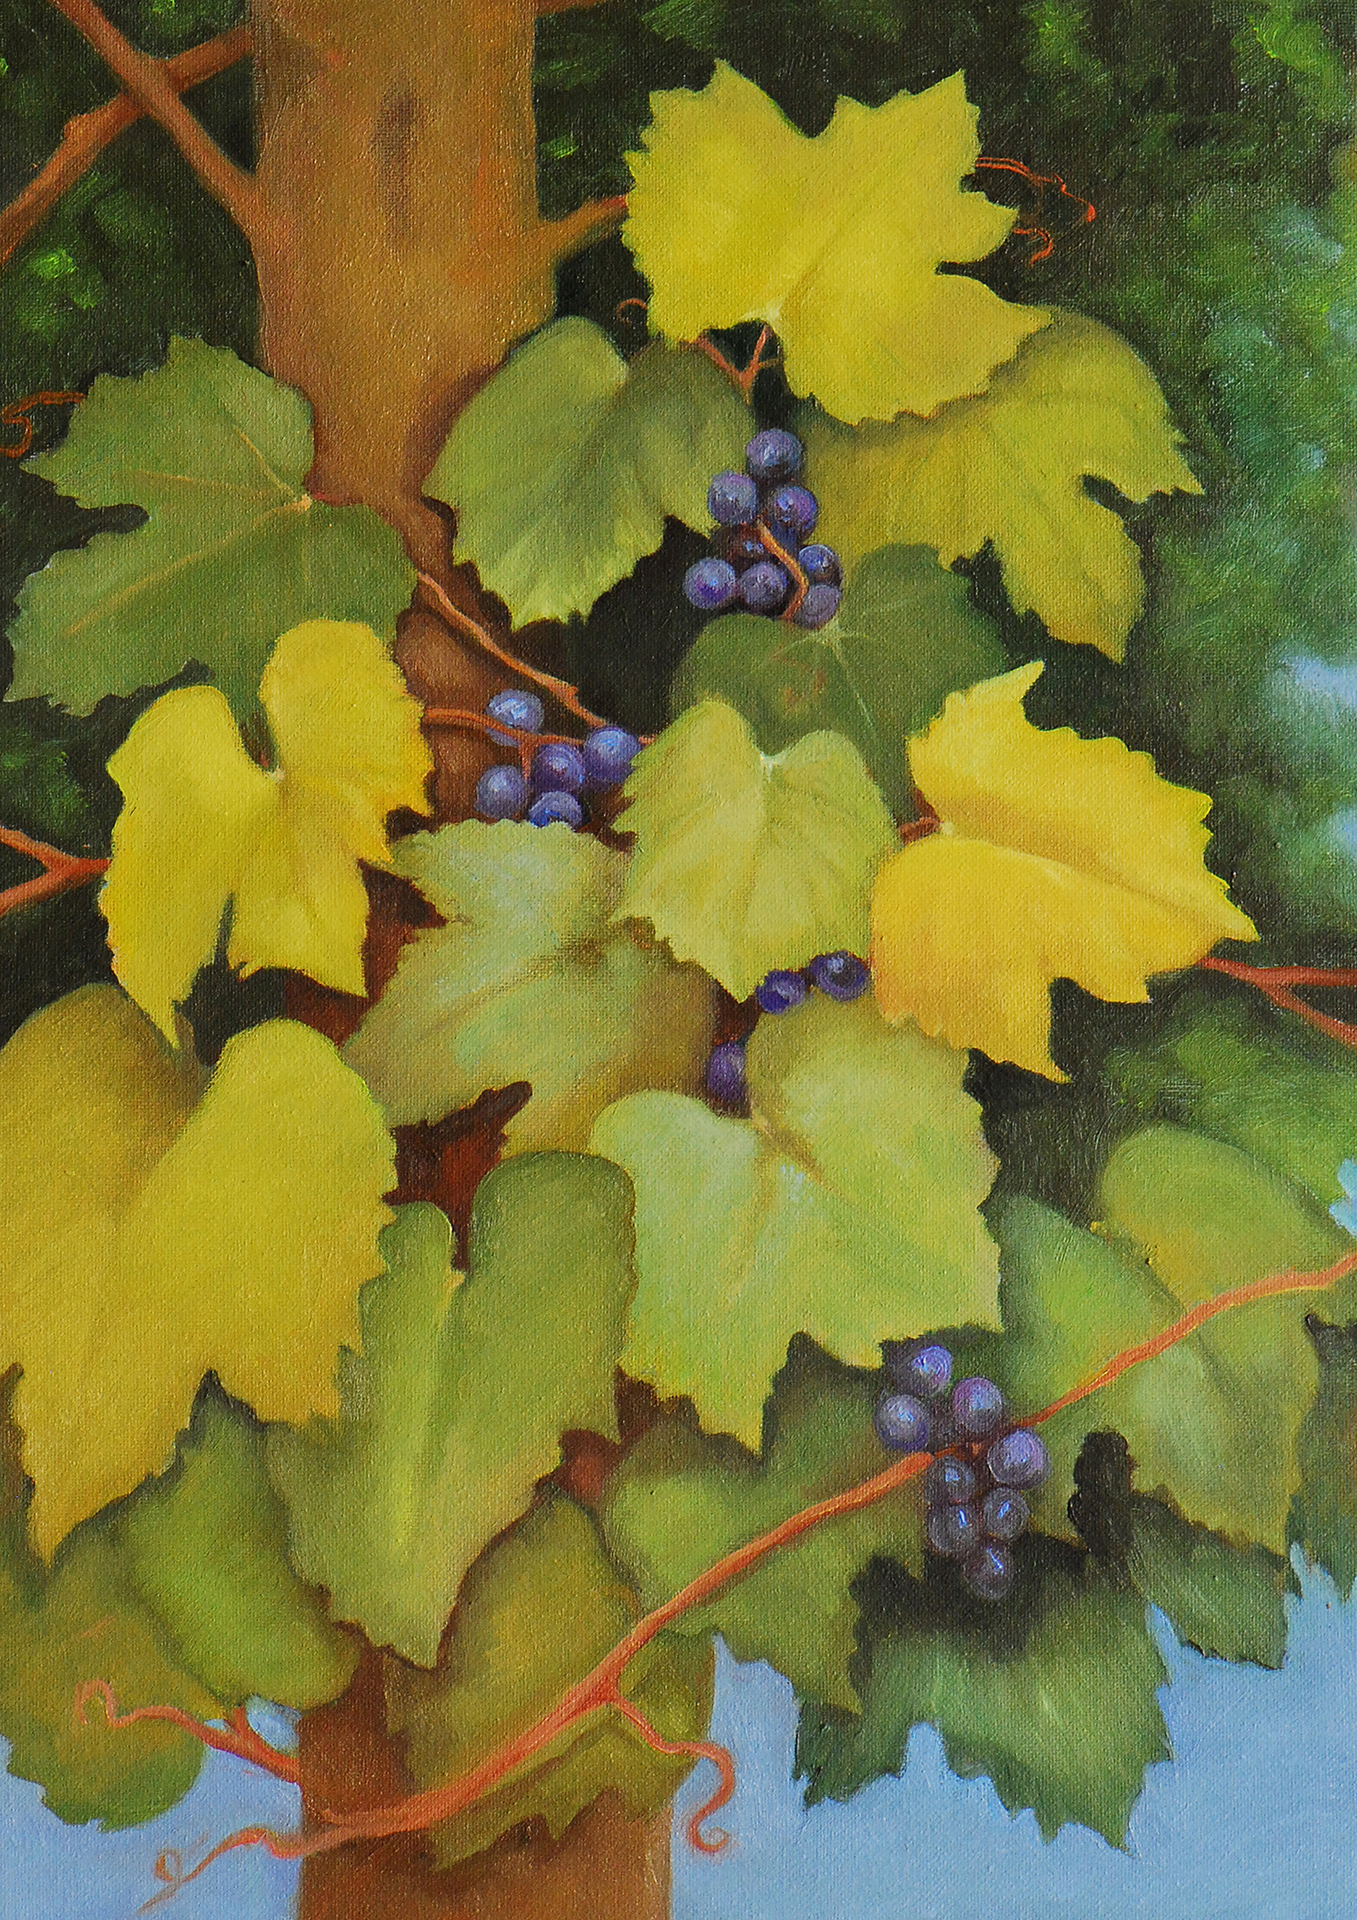 September Harvest, Italy by Fleur Palau, oil on canvas 10x7